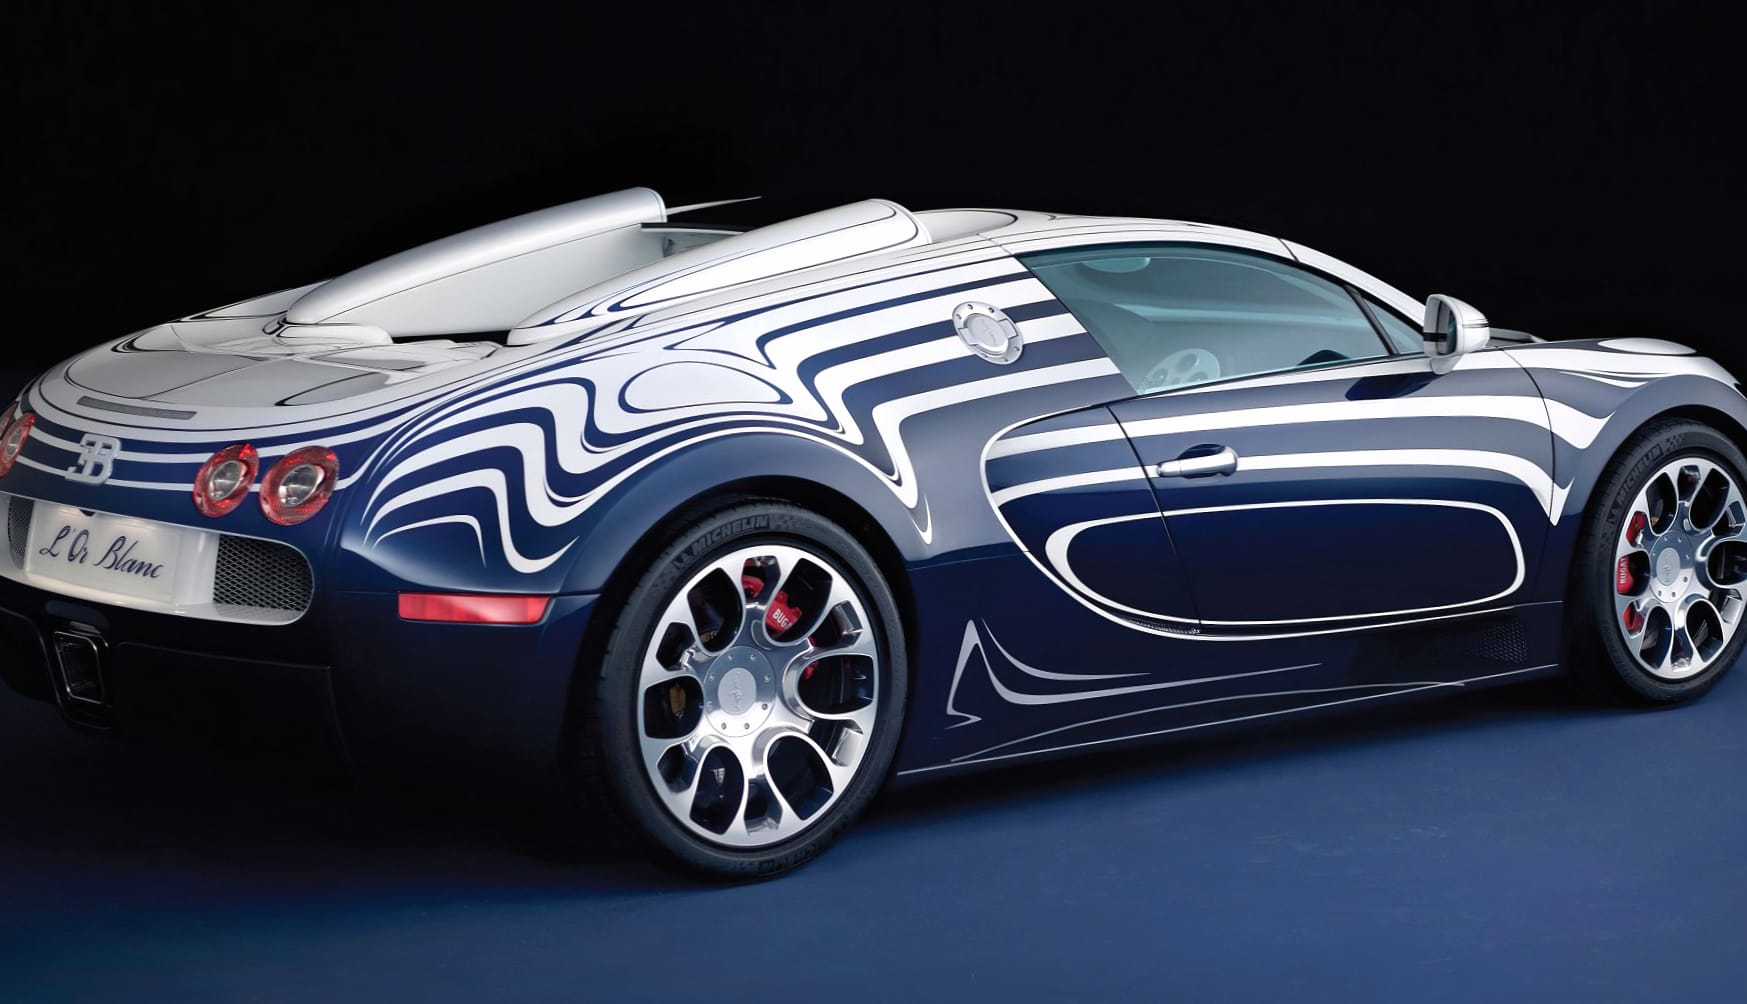 Bugatti Veyron Grand Sport LOr Blanc at 1024 x 1024 iPad size wallpapers HD quality